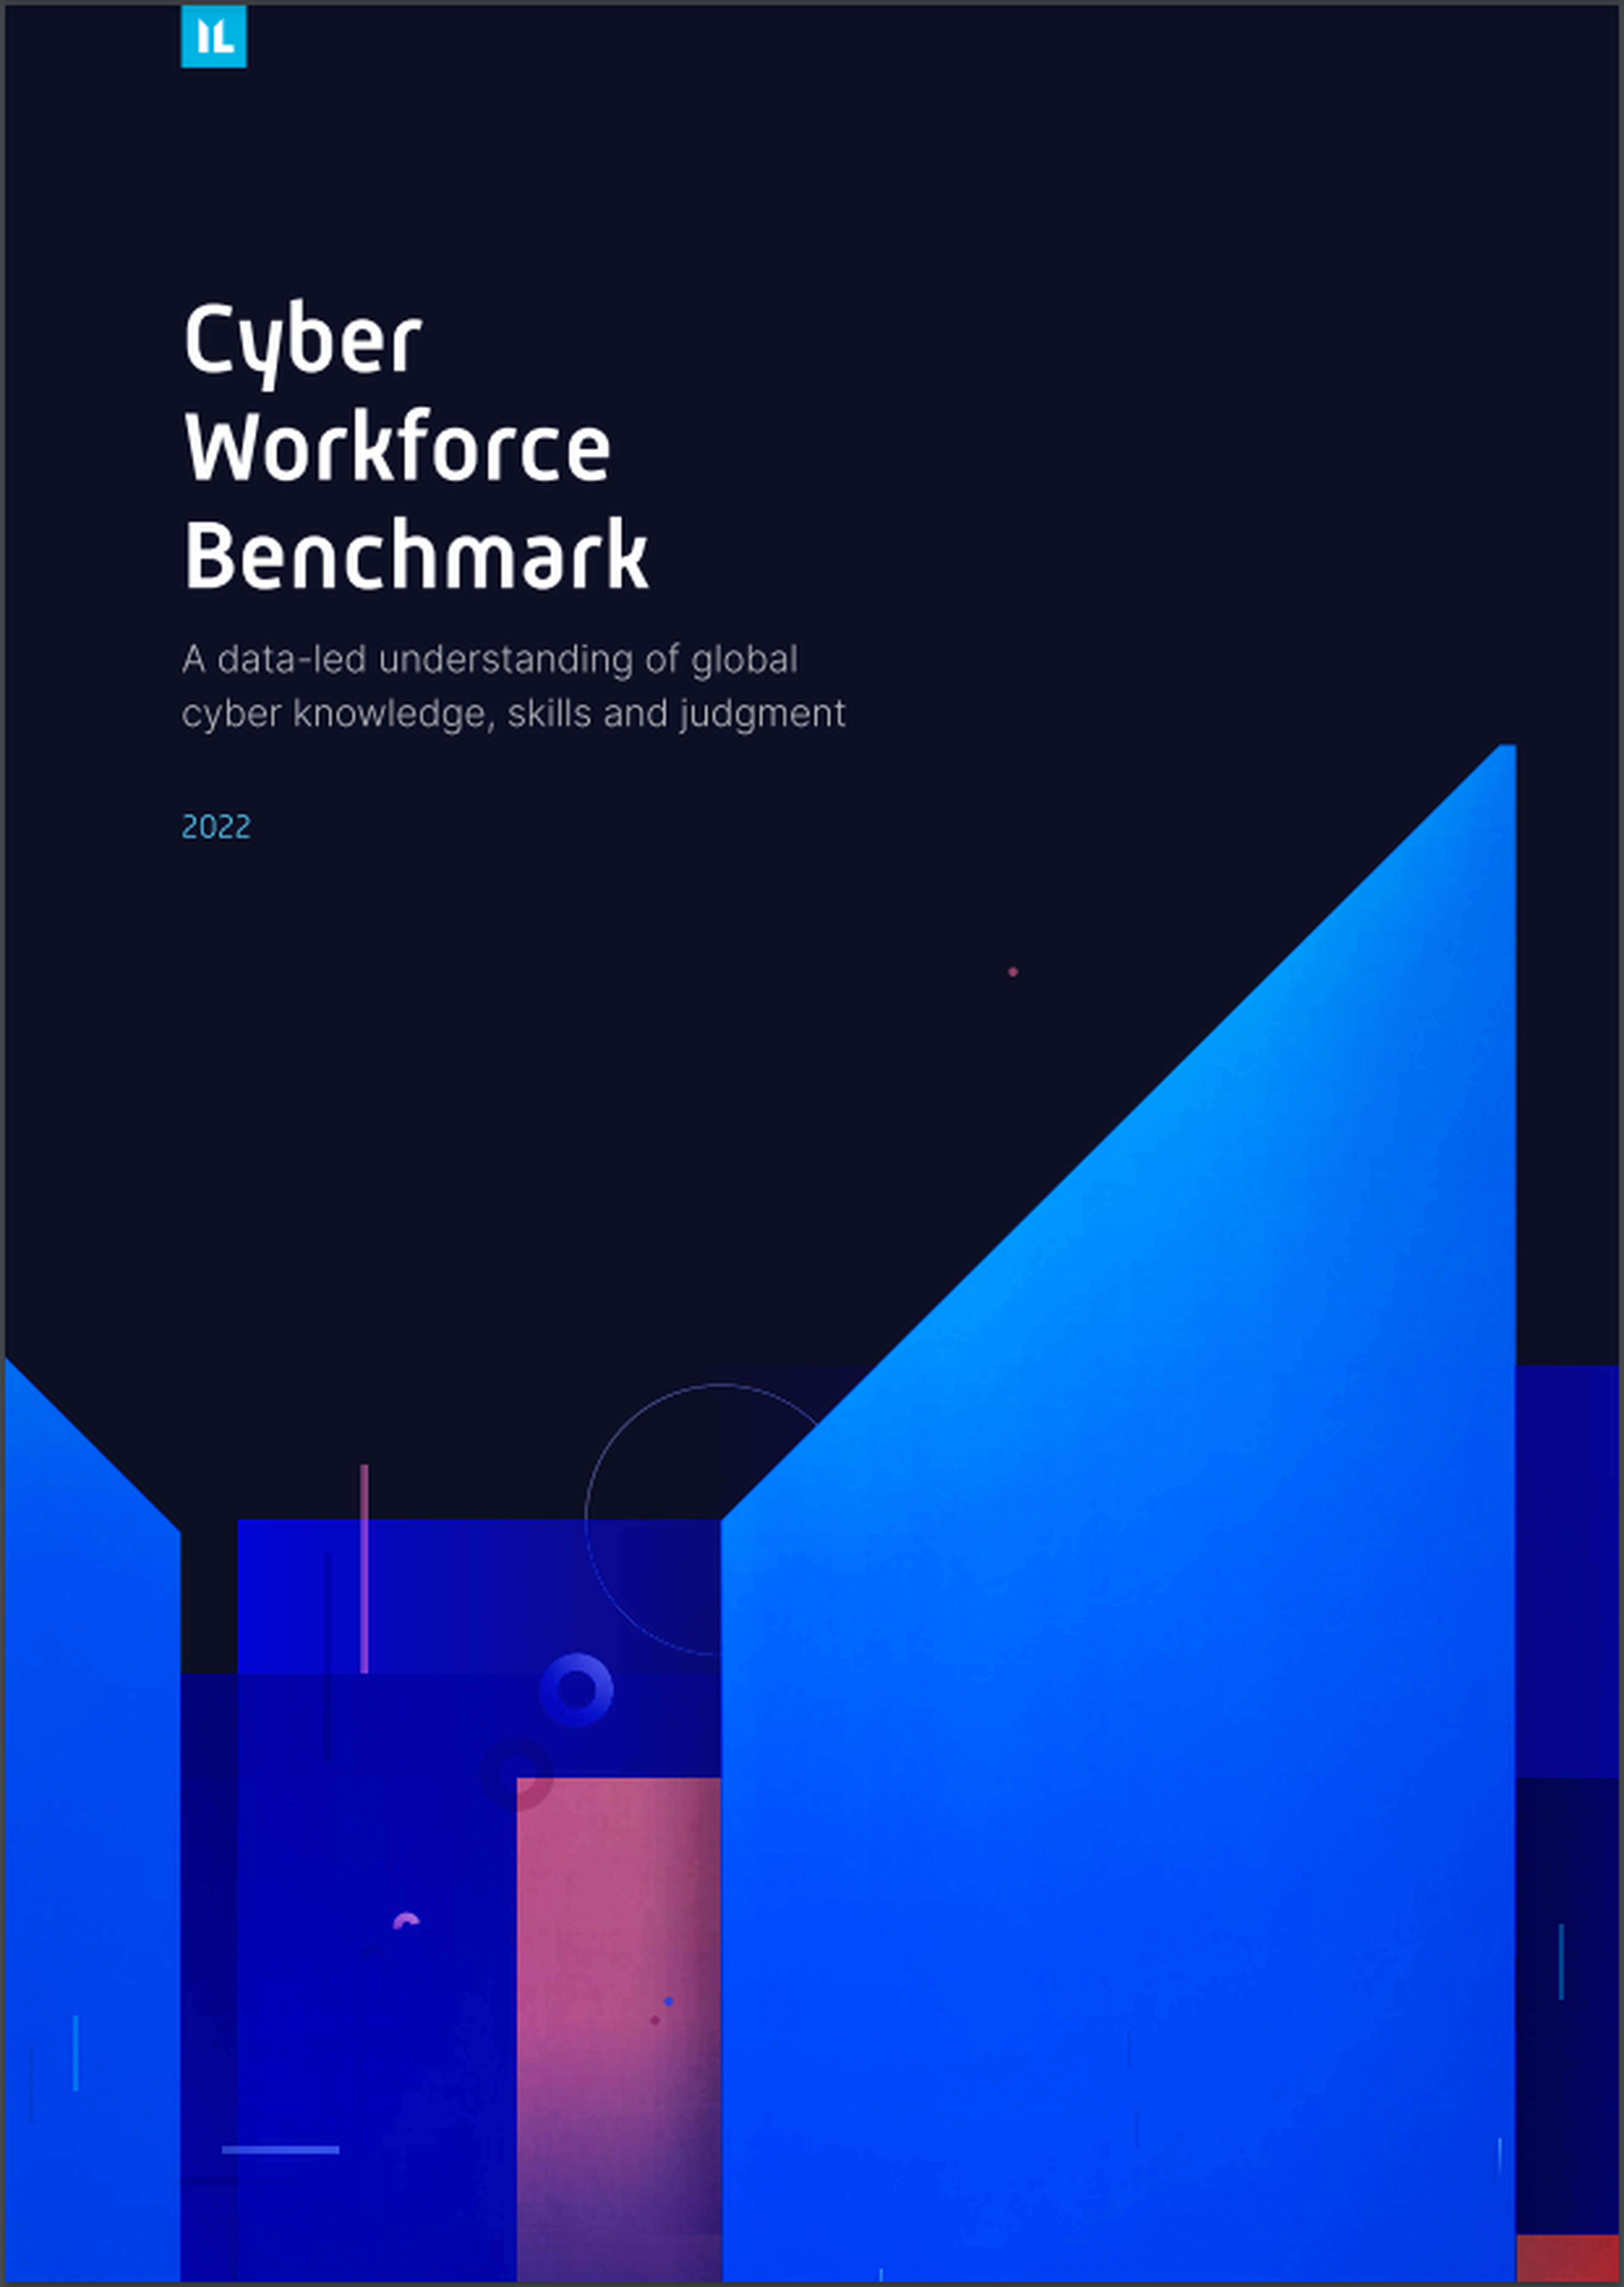 2022 Cyber Workforce Benchmark Report